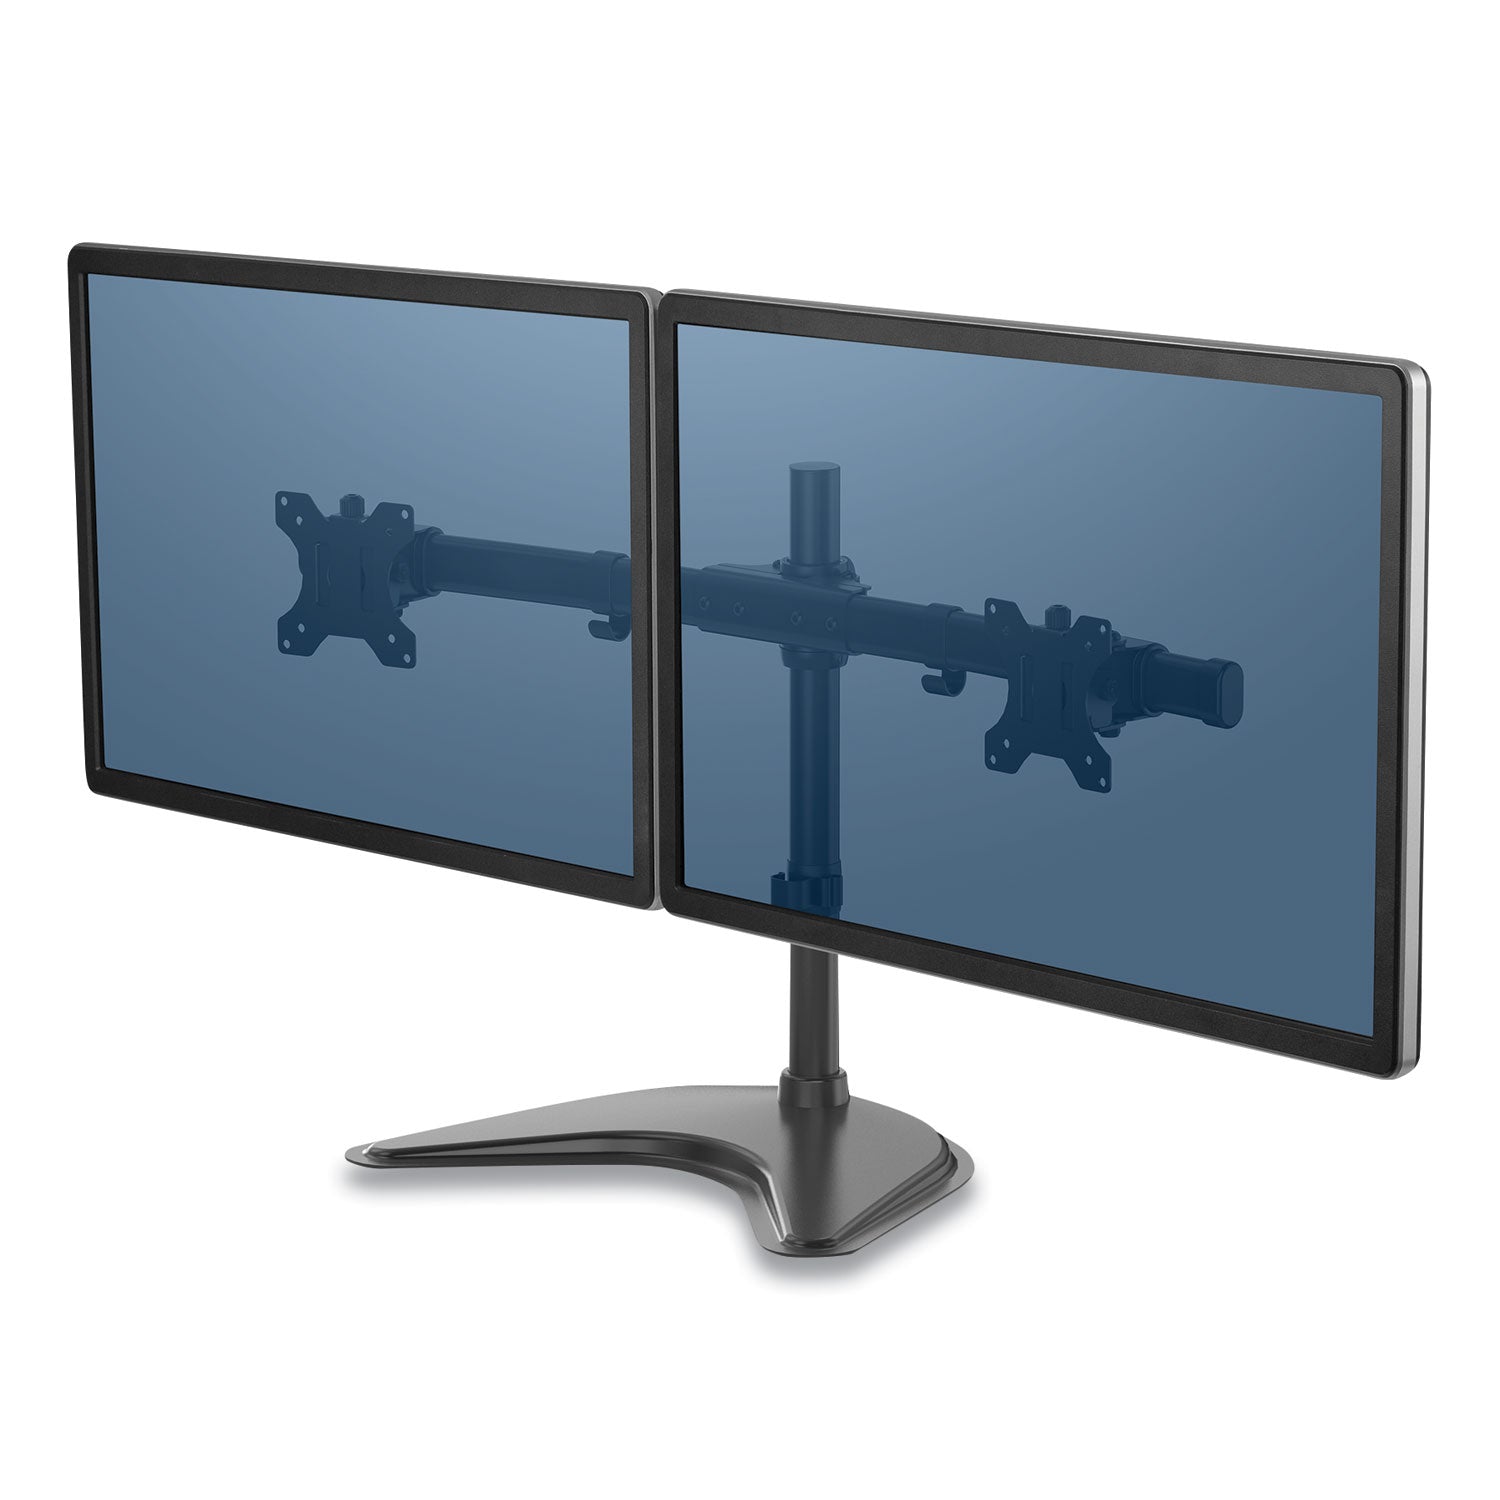 professional-series-freestanding-dual-horizontal-monitor-arm-for-30-monitors-3575-x-11-x-1825-black-supports-17-lb_fel8043701 - 1